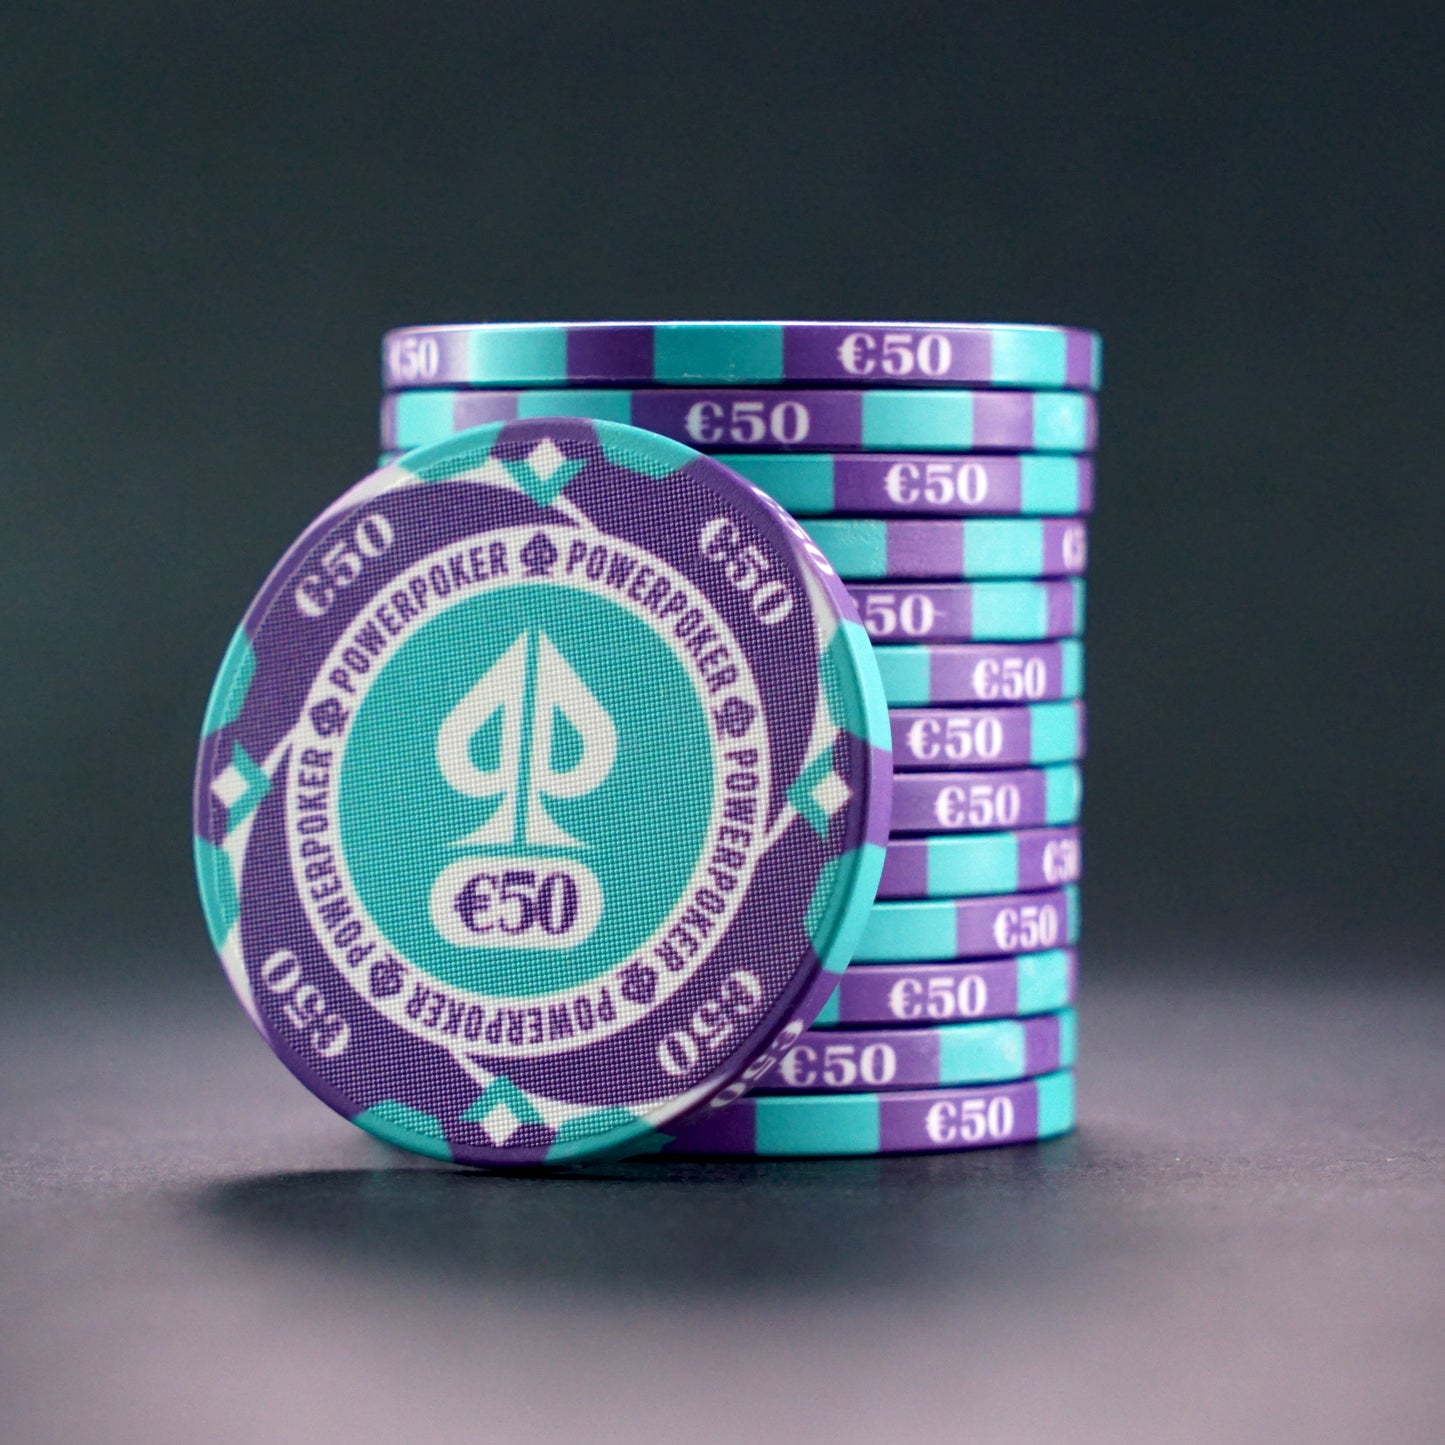 Hurricane Edition 5000 - Keramik Pokerchips (25 Stück)